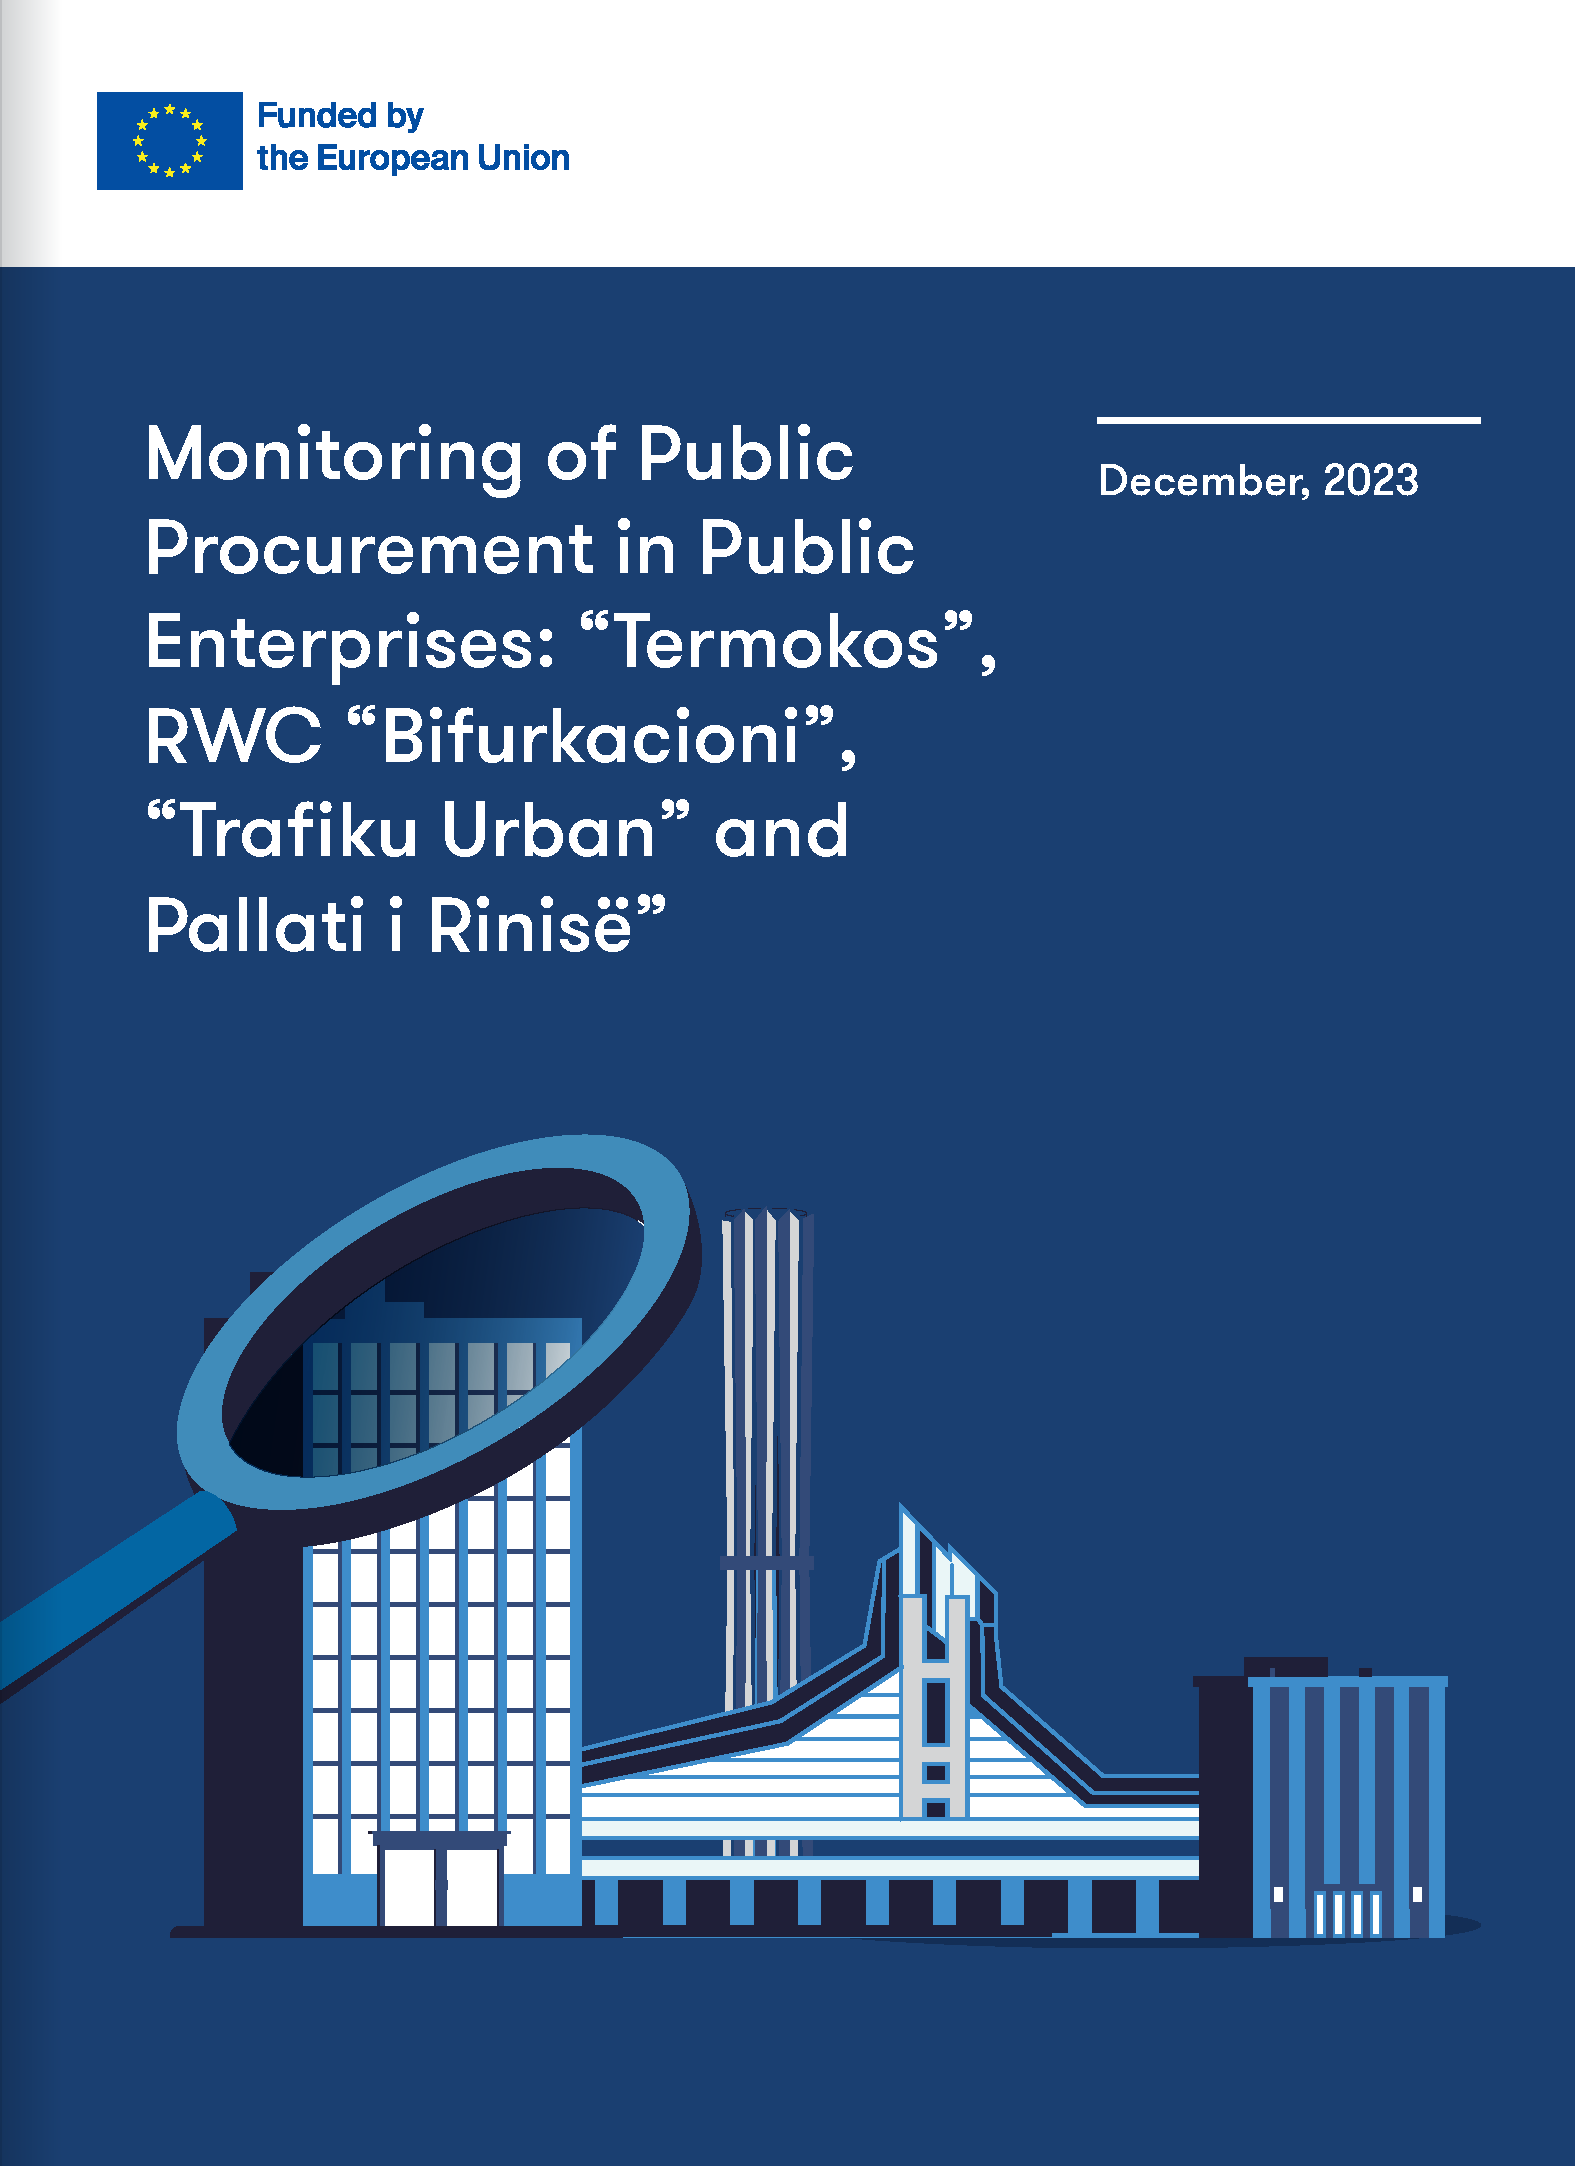 Monitoring of Public Procurement in Public Enterprises: “Termokos”, RWC “Bifurkacioni”, “Trafiku Urban” and Pallati i Rinisë”